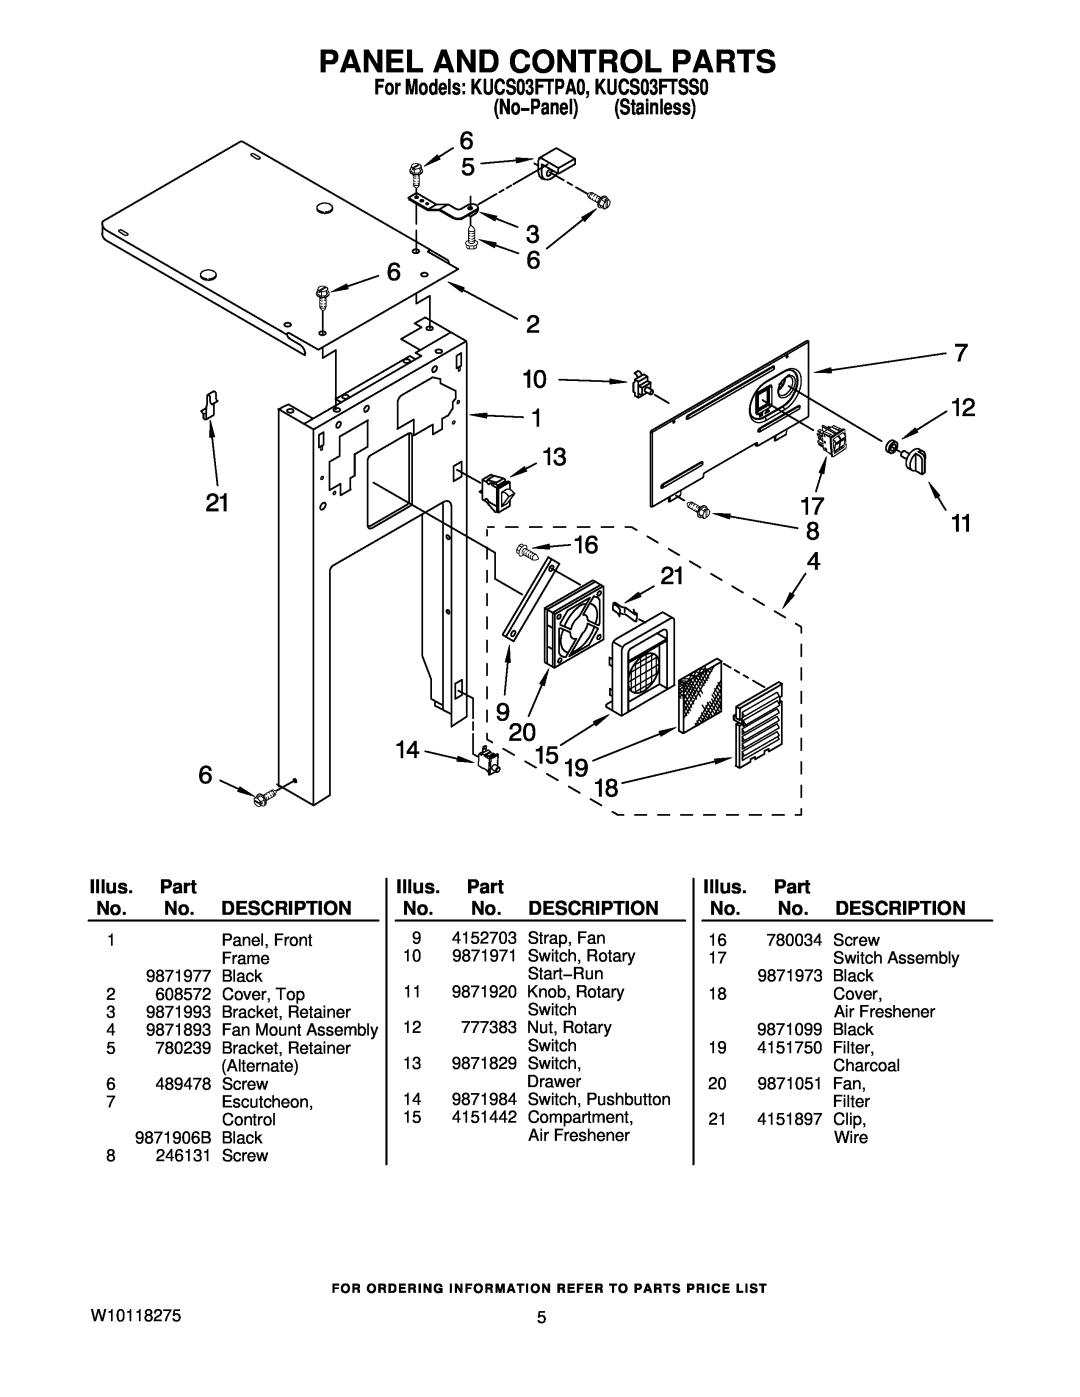 KitchenAid manual Panel And Control Parts, For Models KUCS03FTPA0, KUCS03FTSS0, No−Panel Stainless 